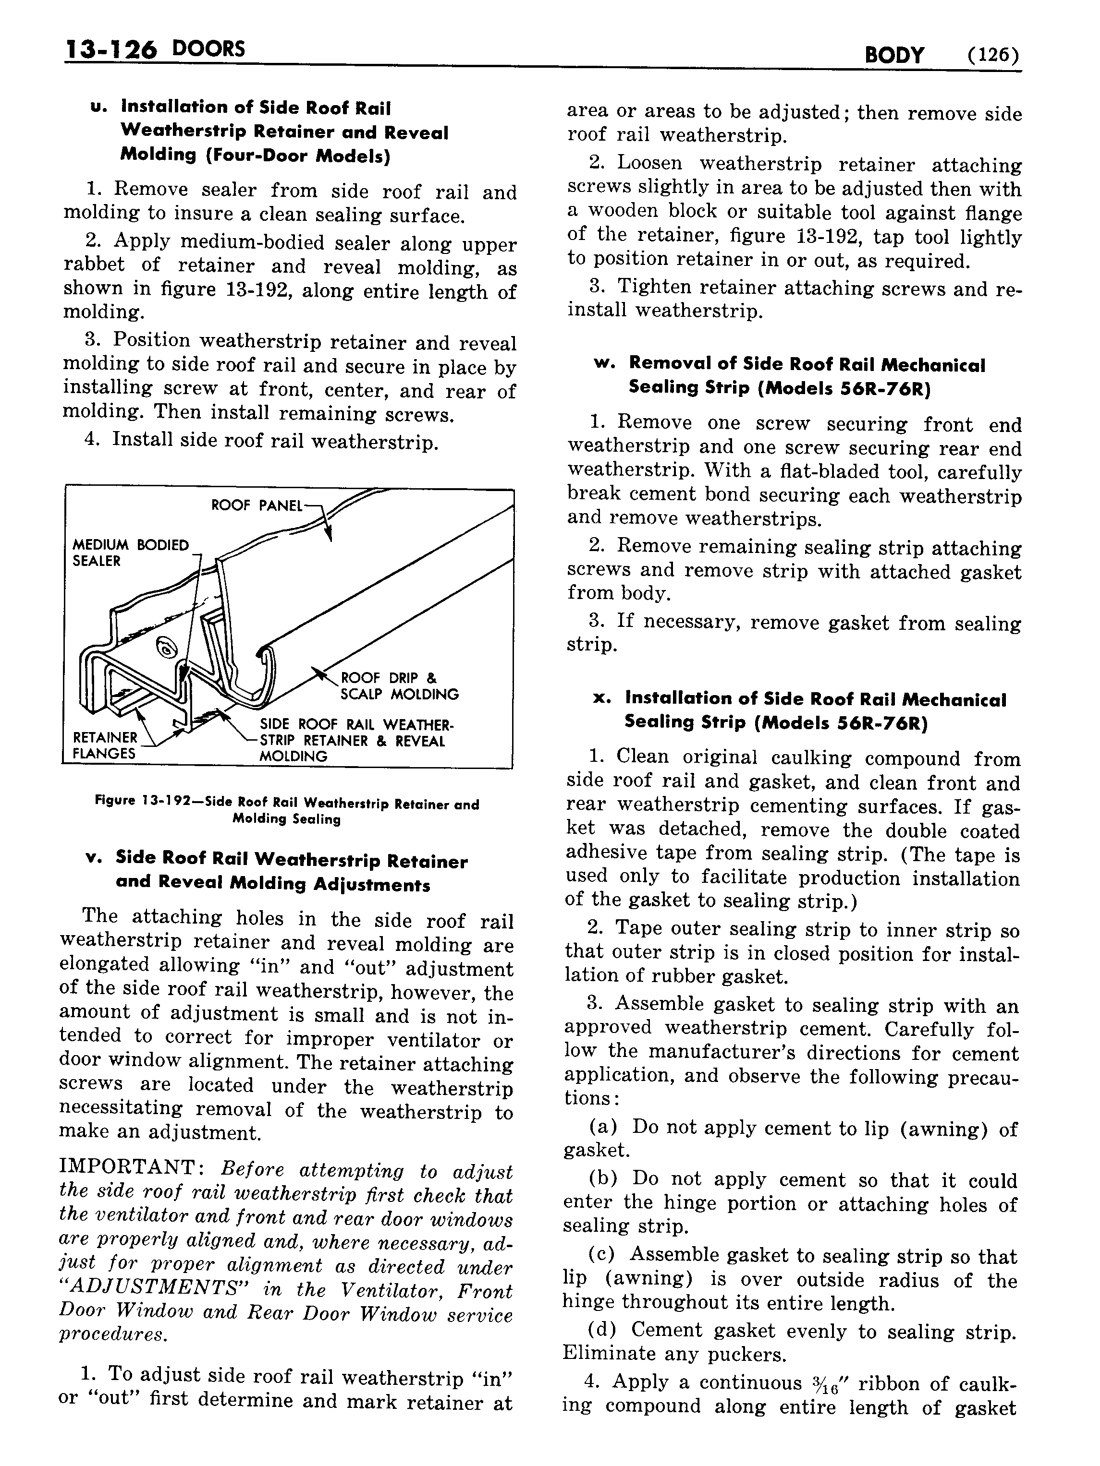 n_1957 Buick Body Service Manual-128-128.jpg